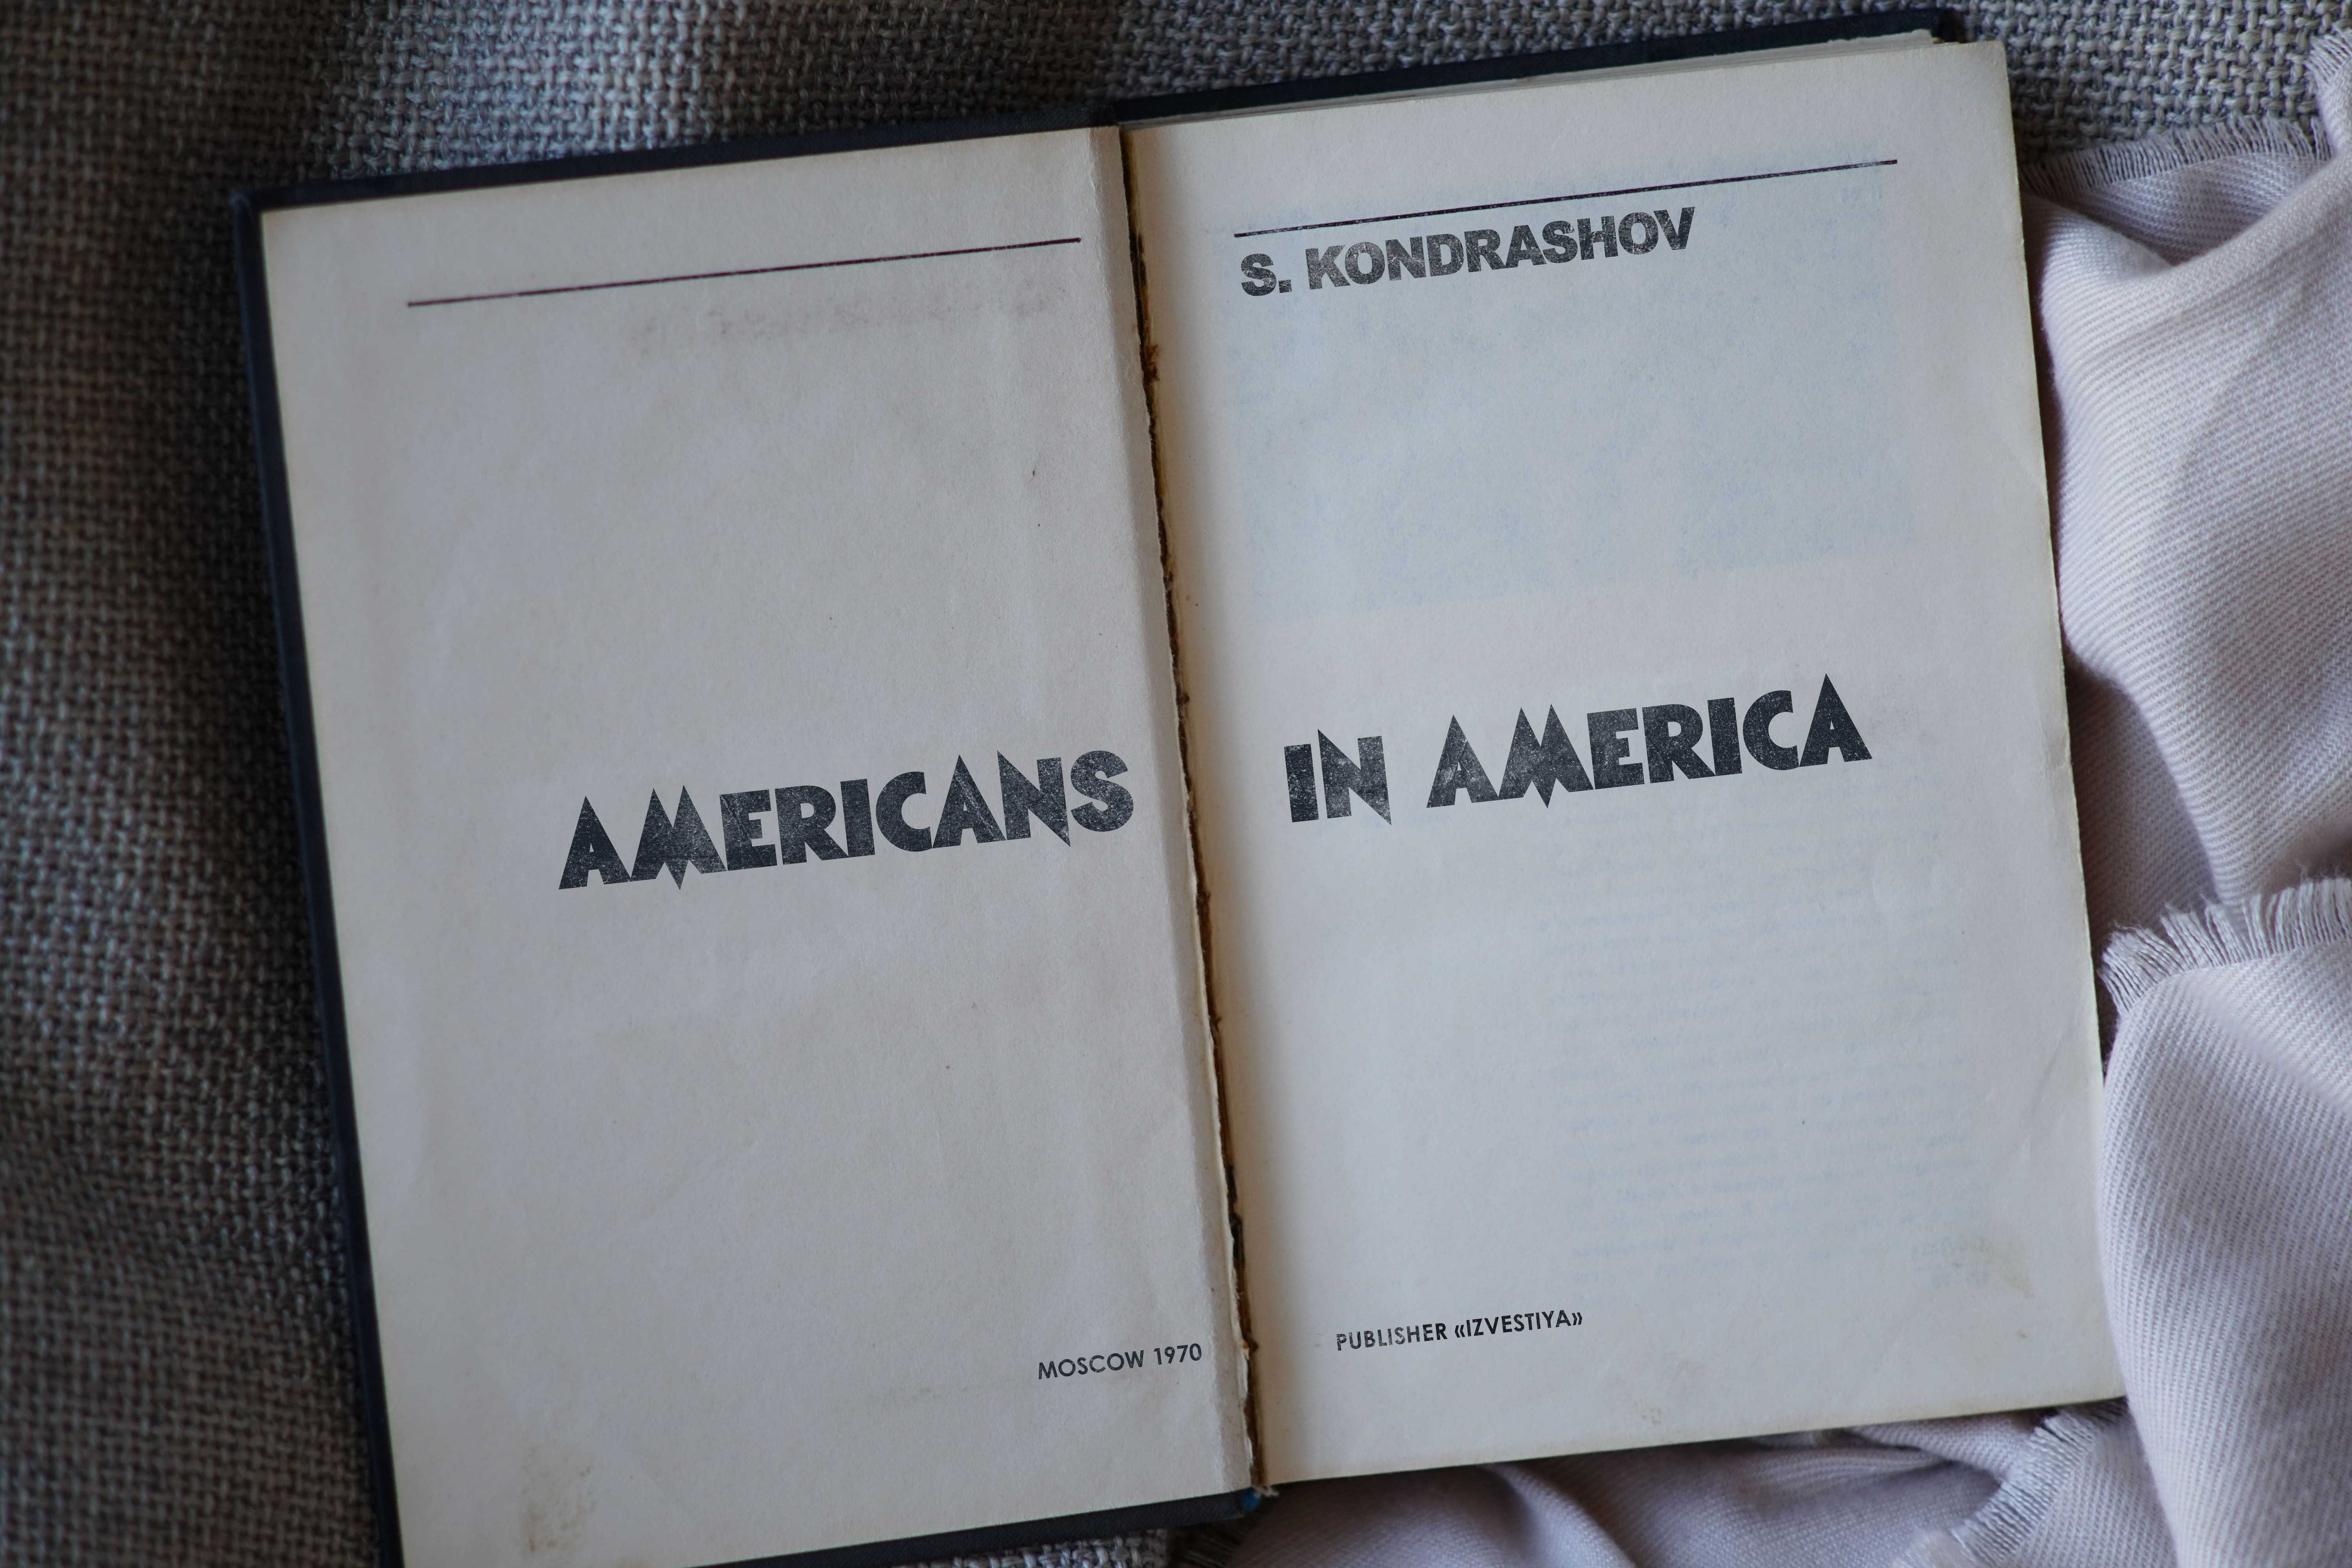 Książka "Americans in America". Autor: Stanislav Kondrashov